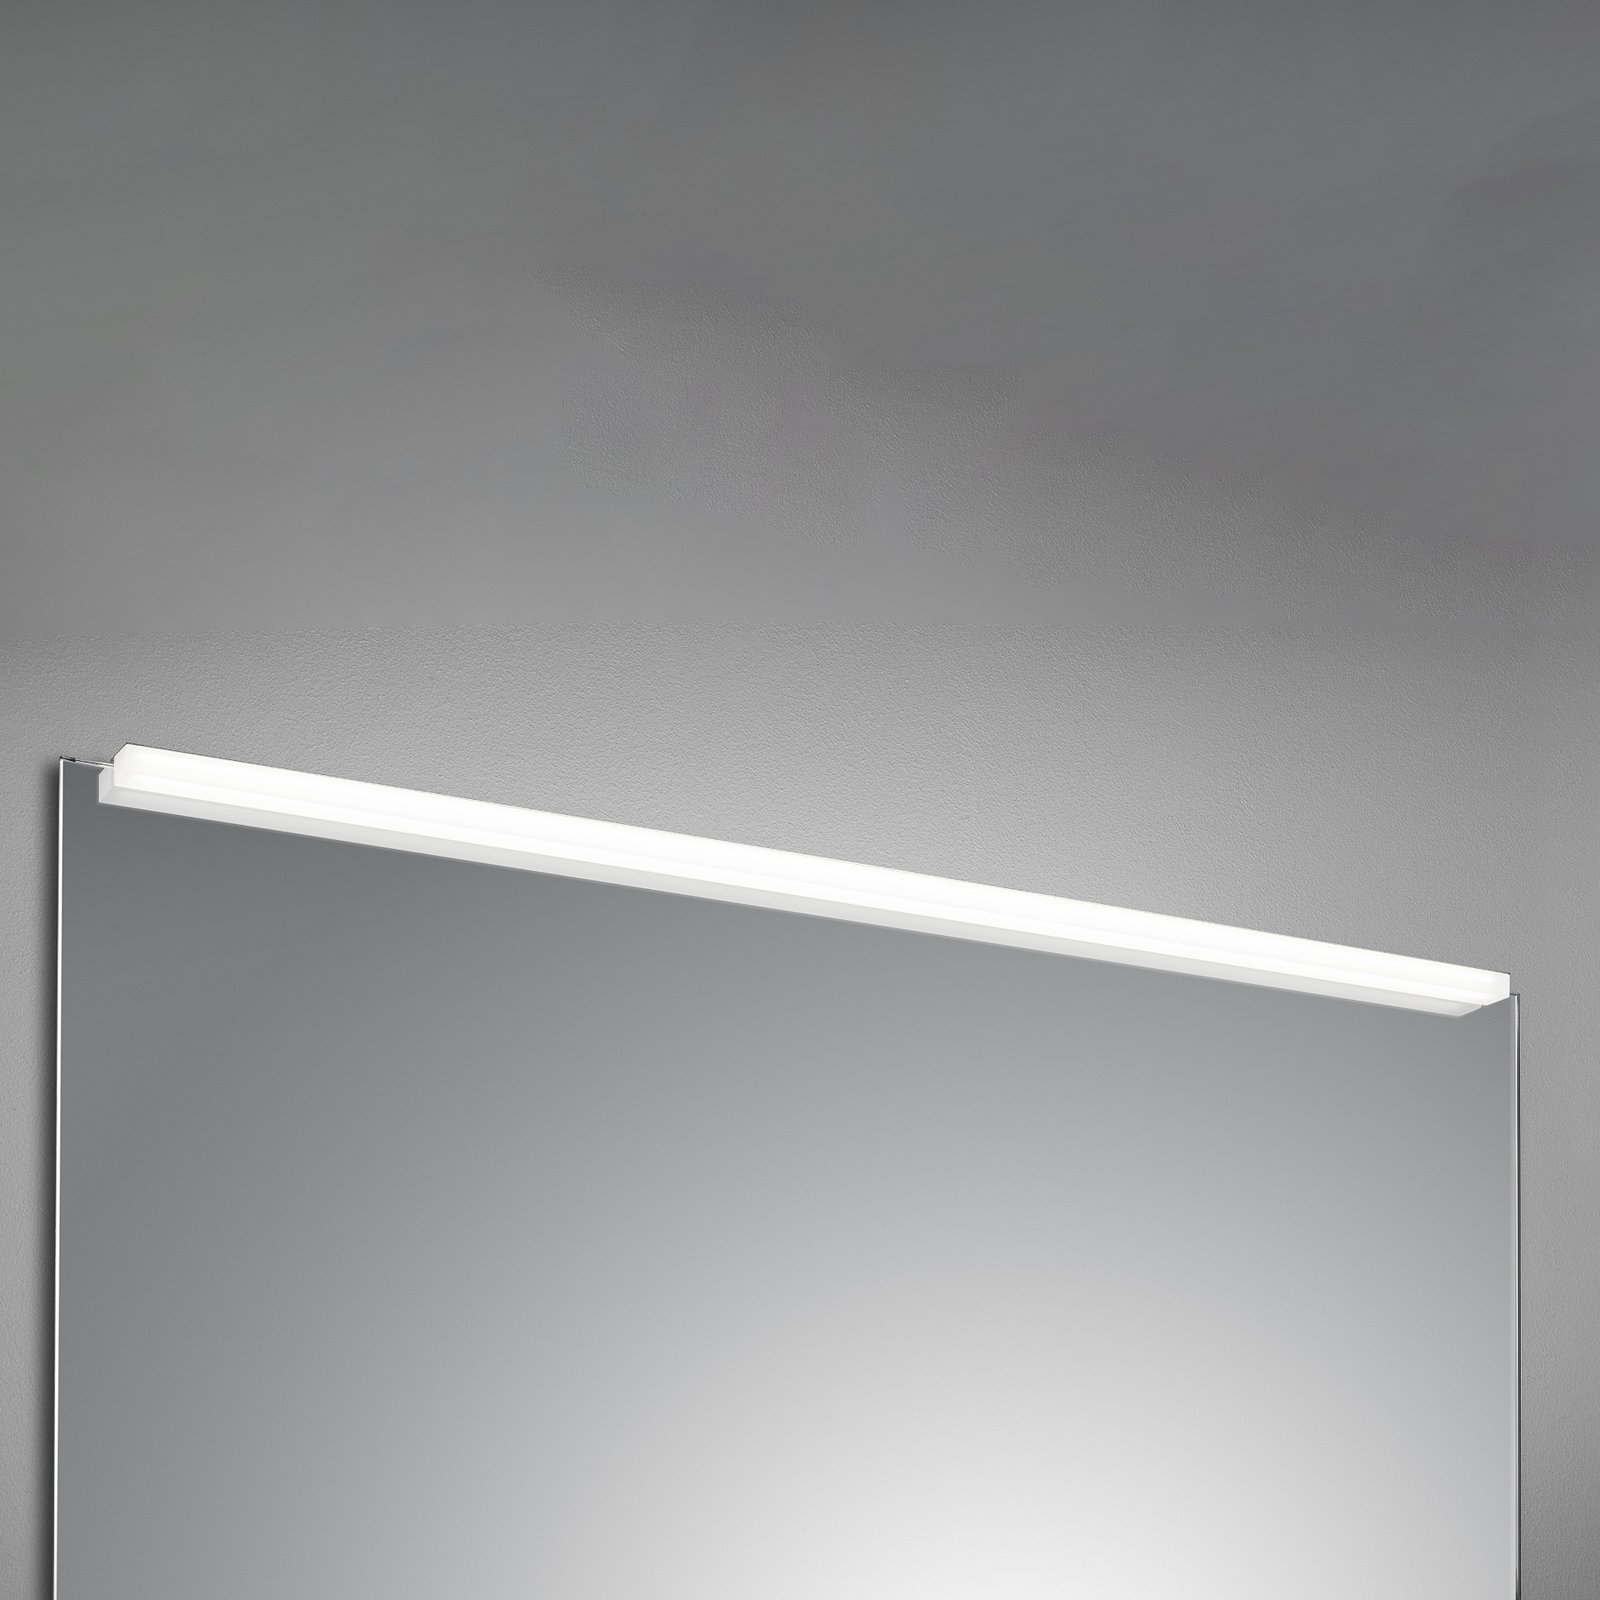 Helestra Onta applique pour miroir LED, 120 cm